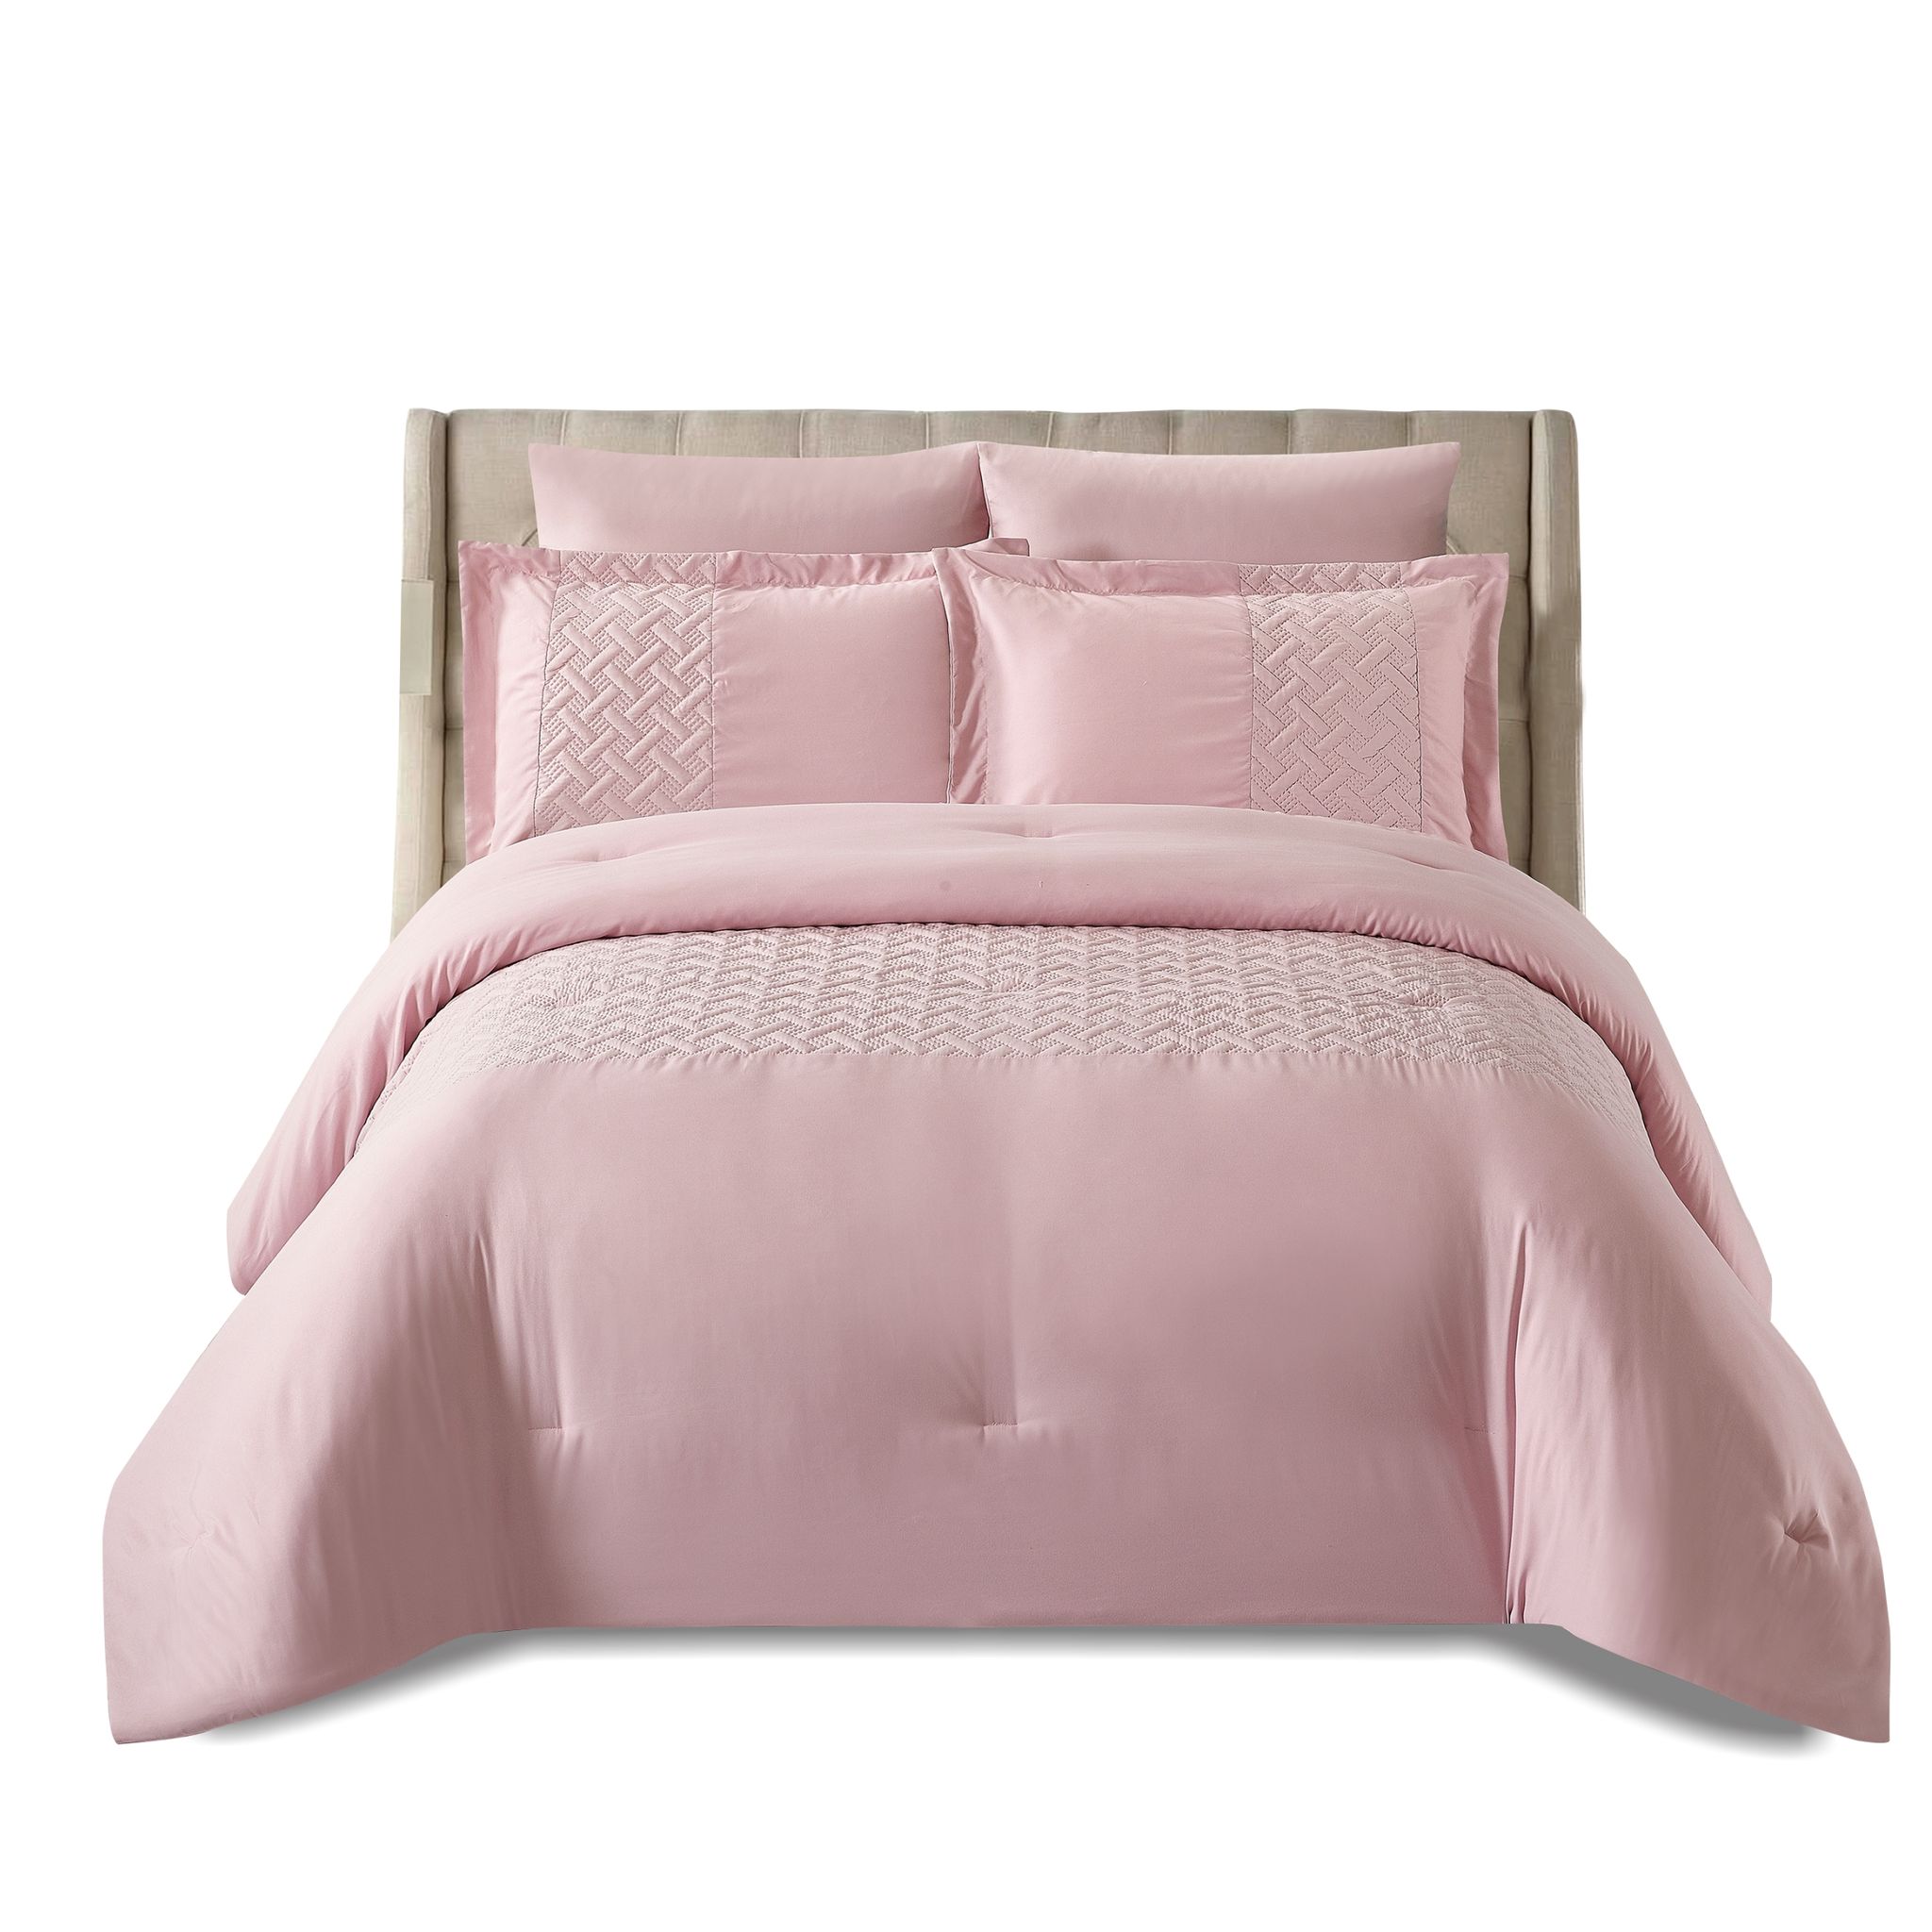 Ultrasonic Patch Worked Comforter Set 4-Piece Queen Cavern Pink